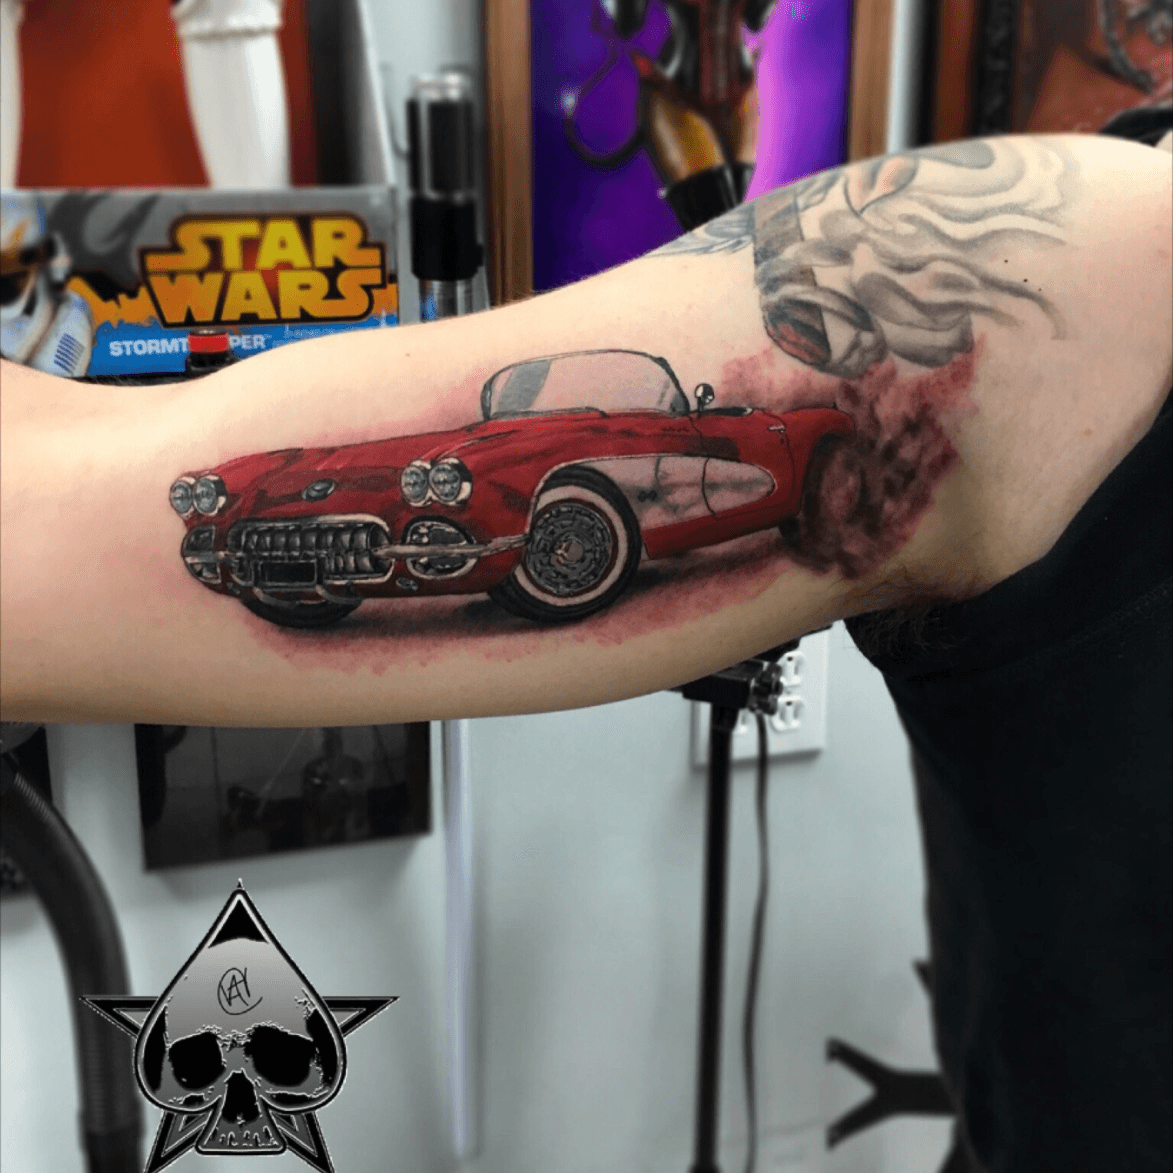 Chevy Corvette logo  Chevy Corvette logo tattoo on arm  Jason Powell   Flickr